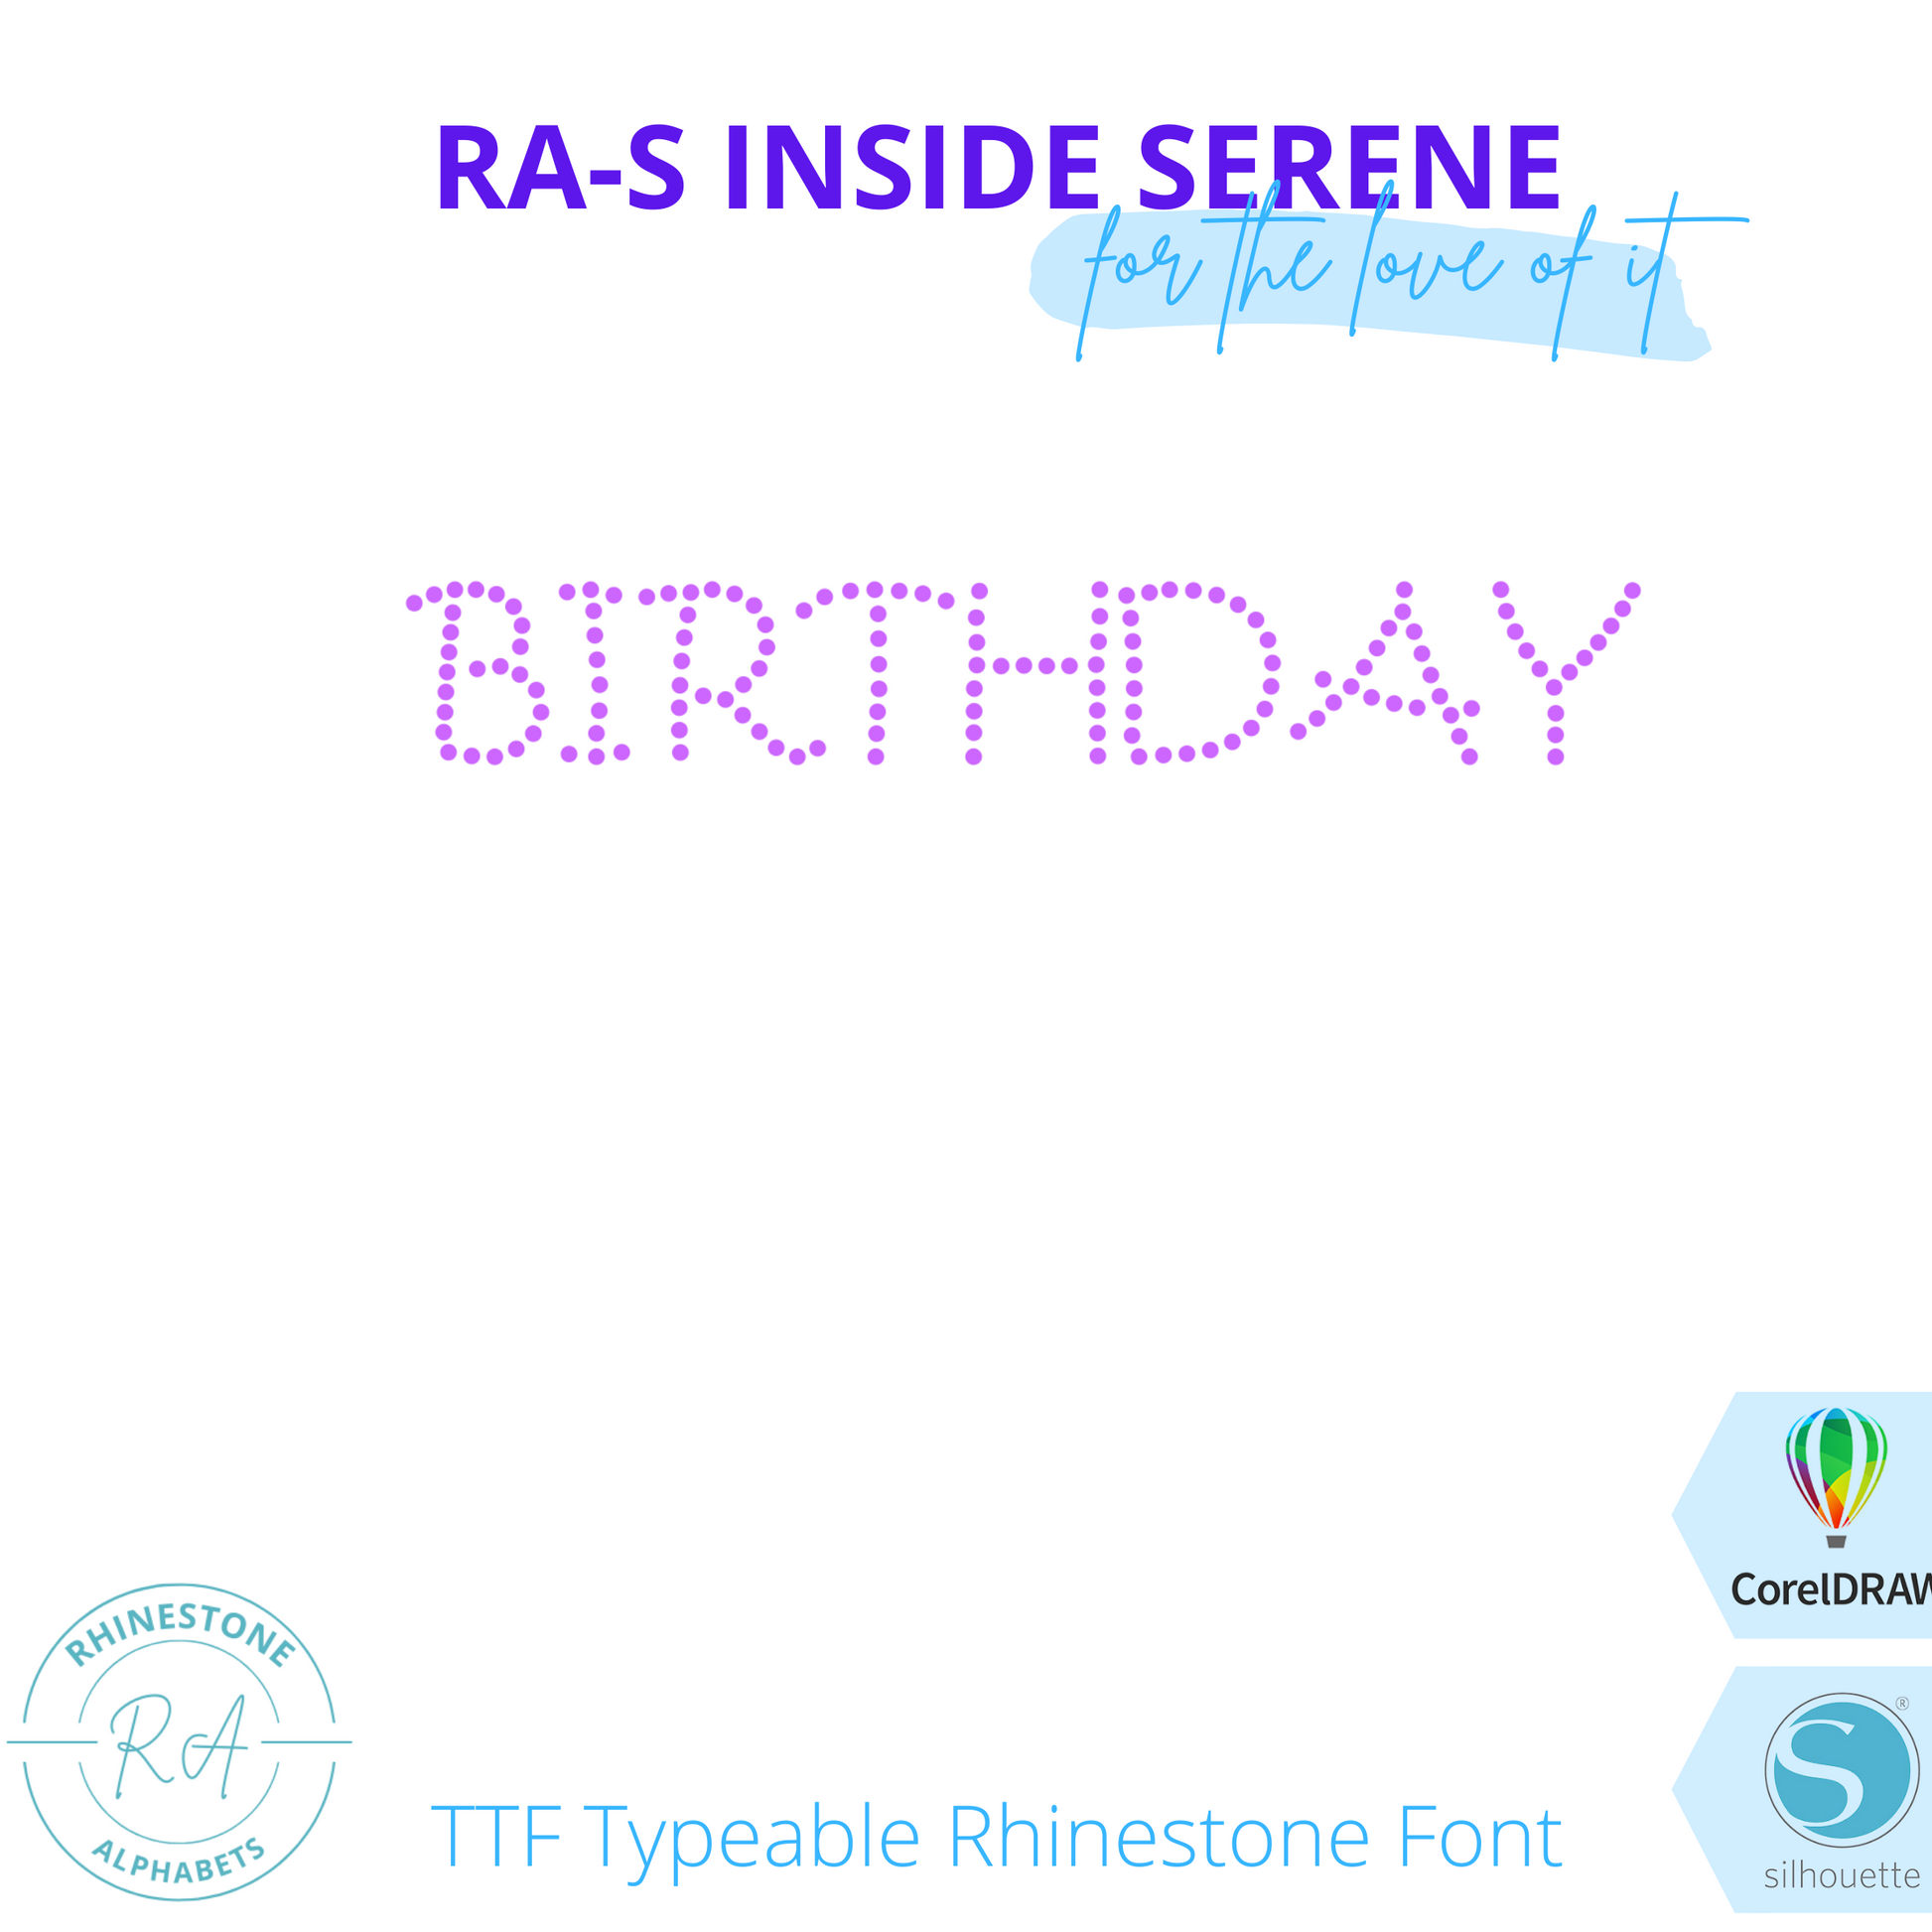 RA-S Inside Serene - RhinestoneAlphabets